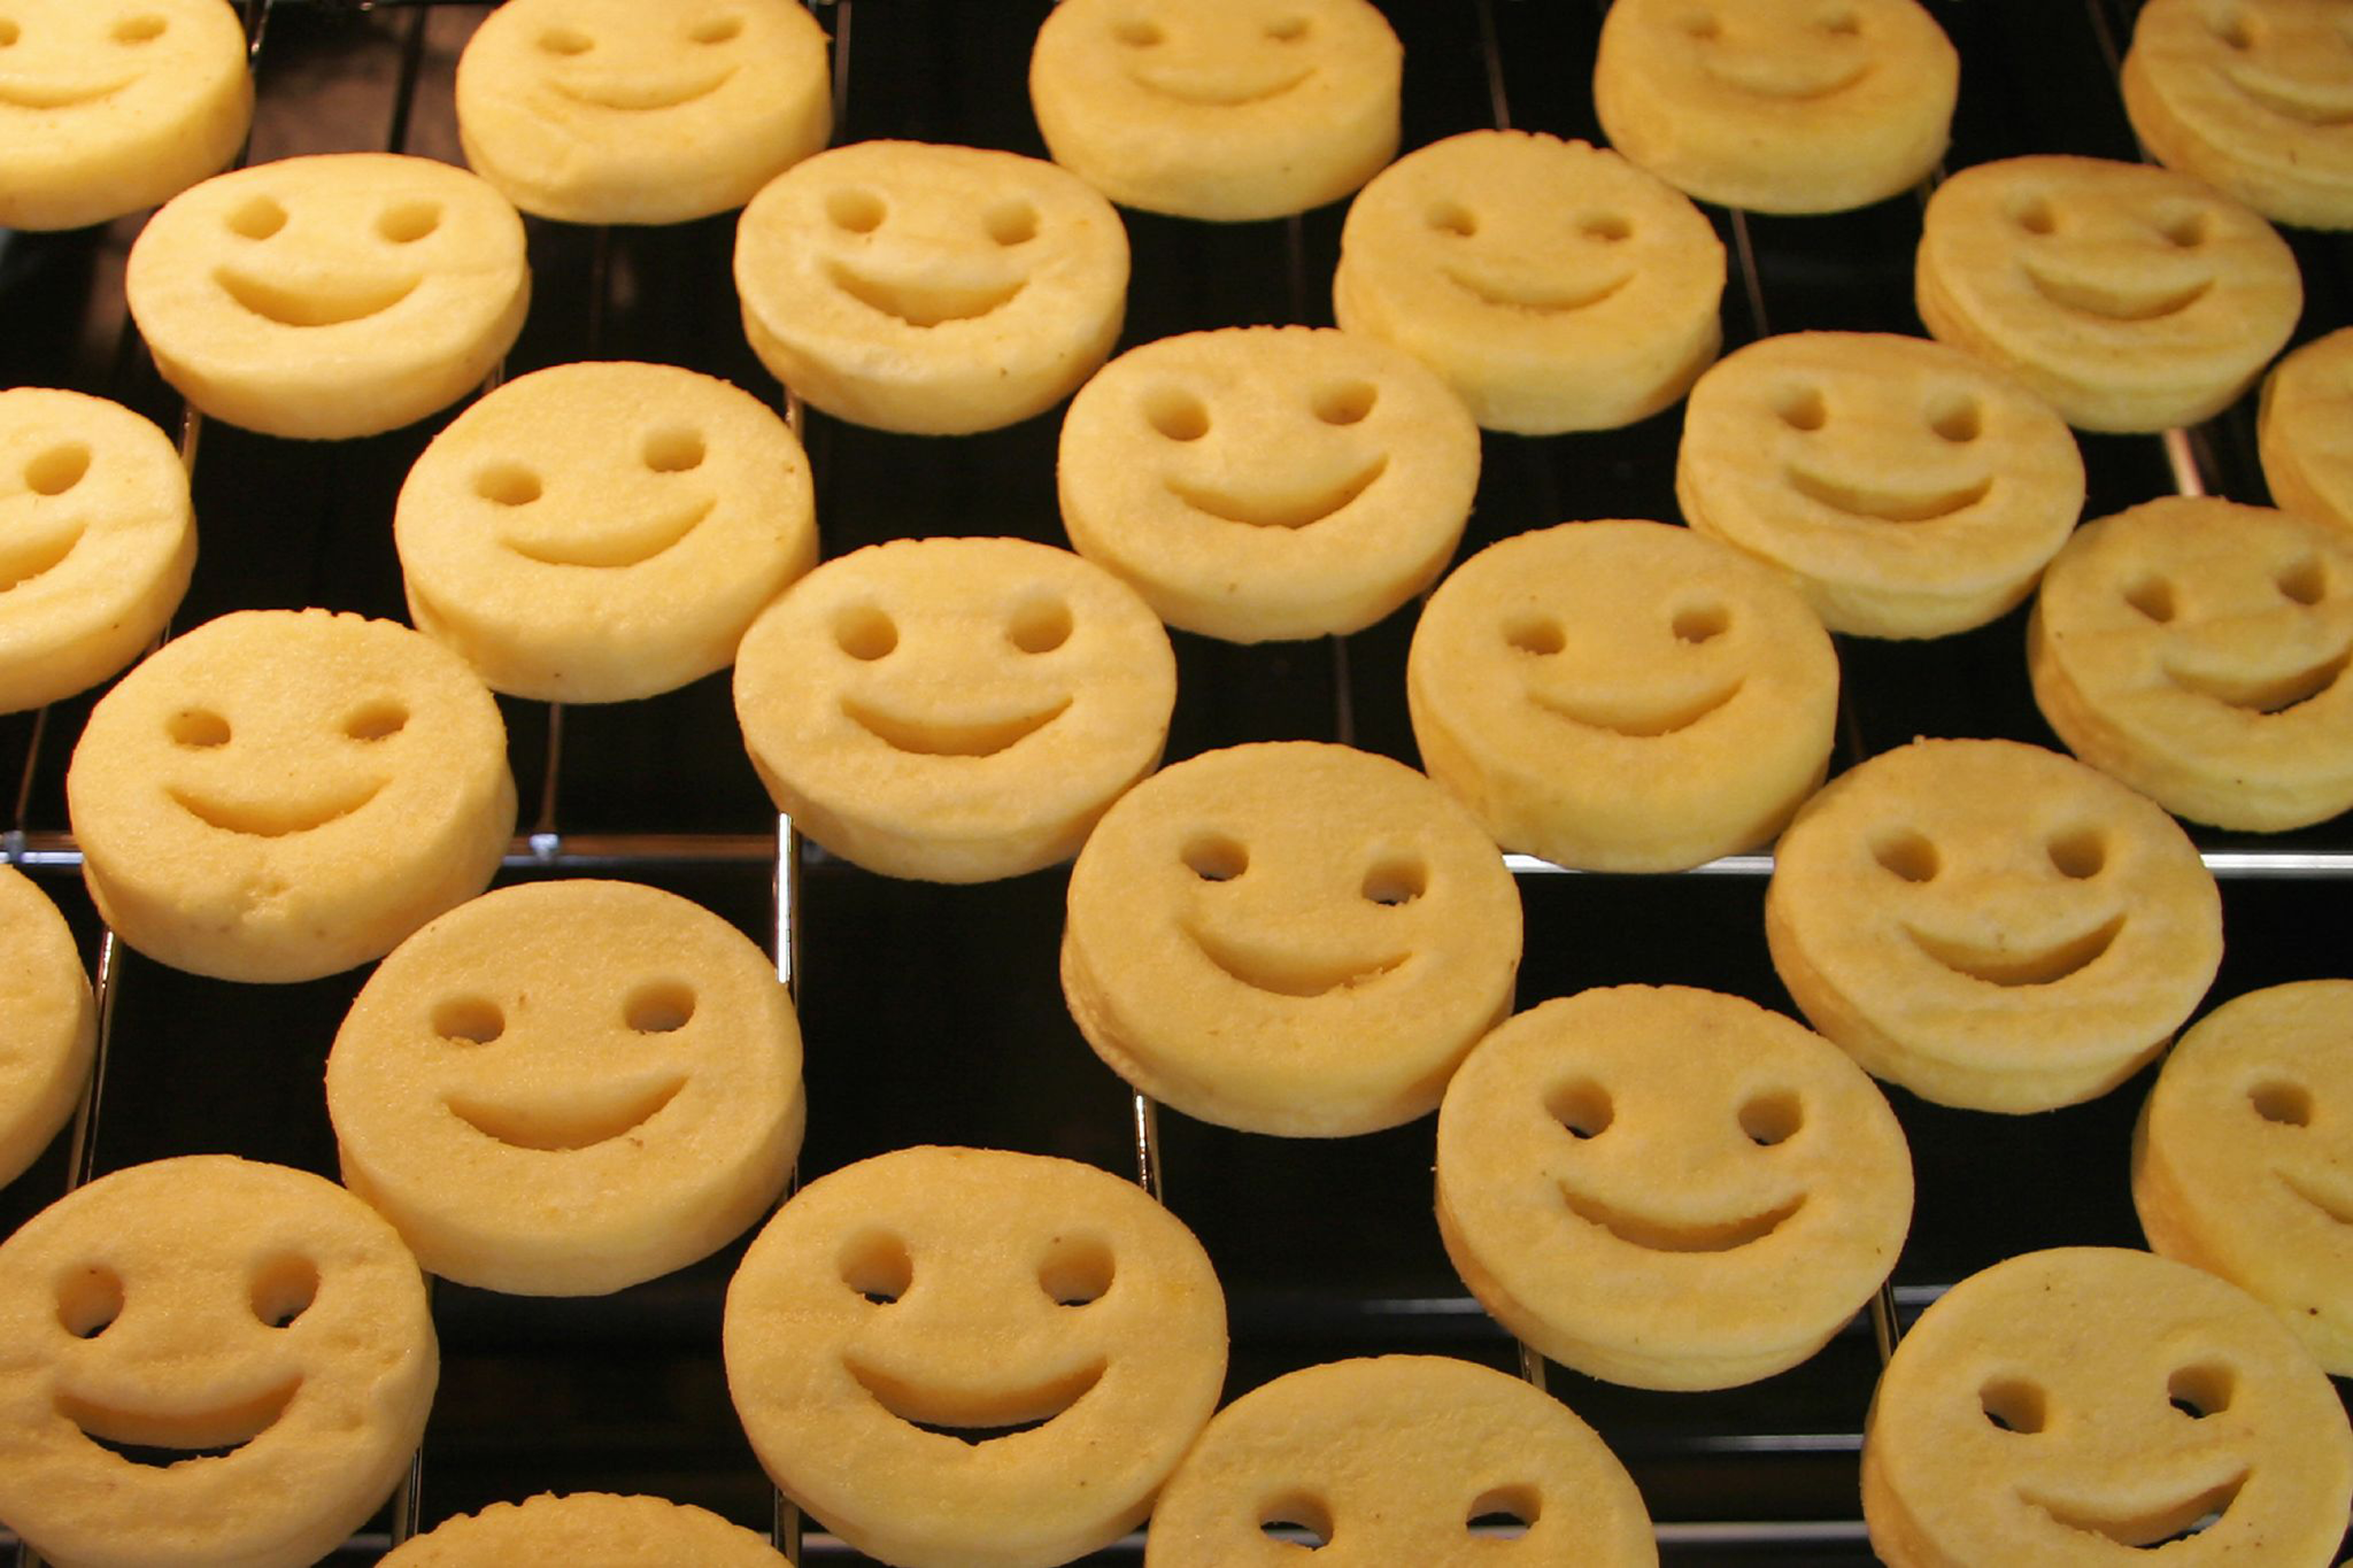 A close up of potato smiles on a baking tray